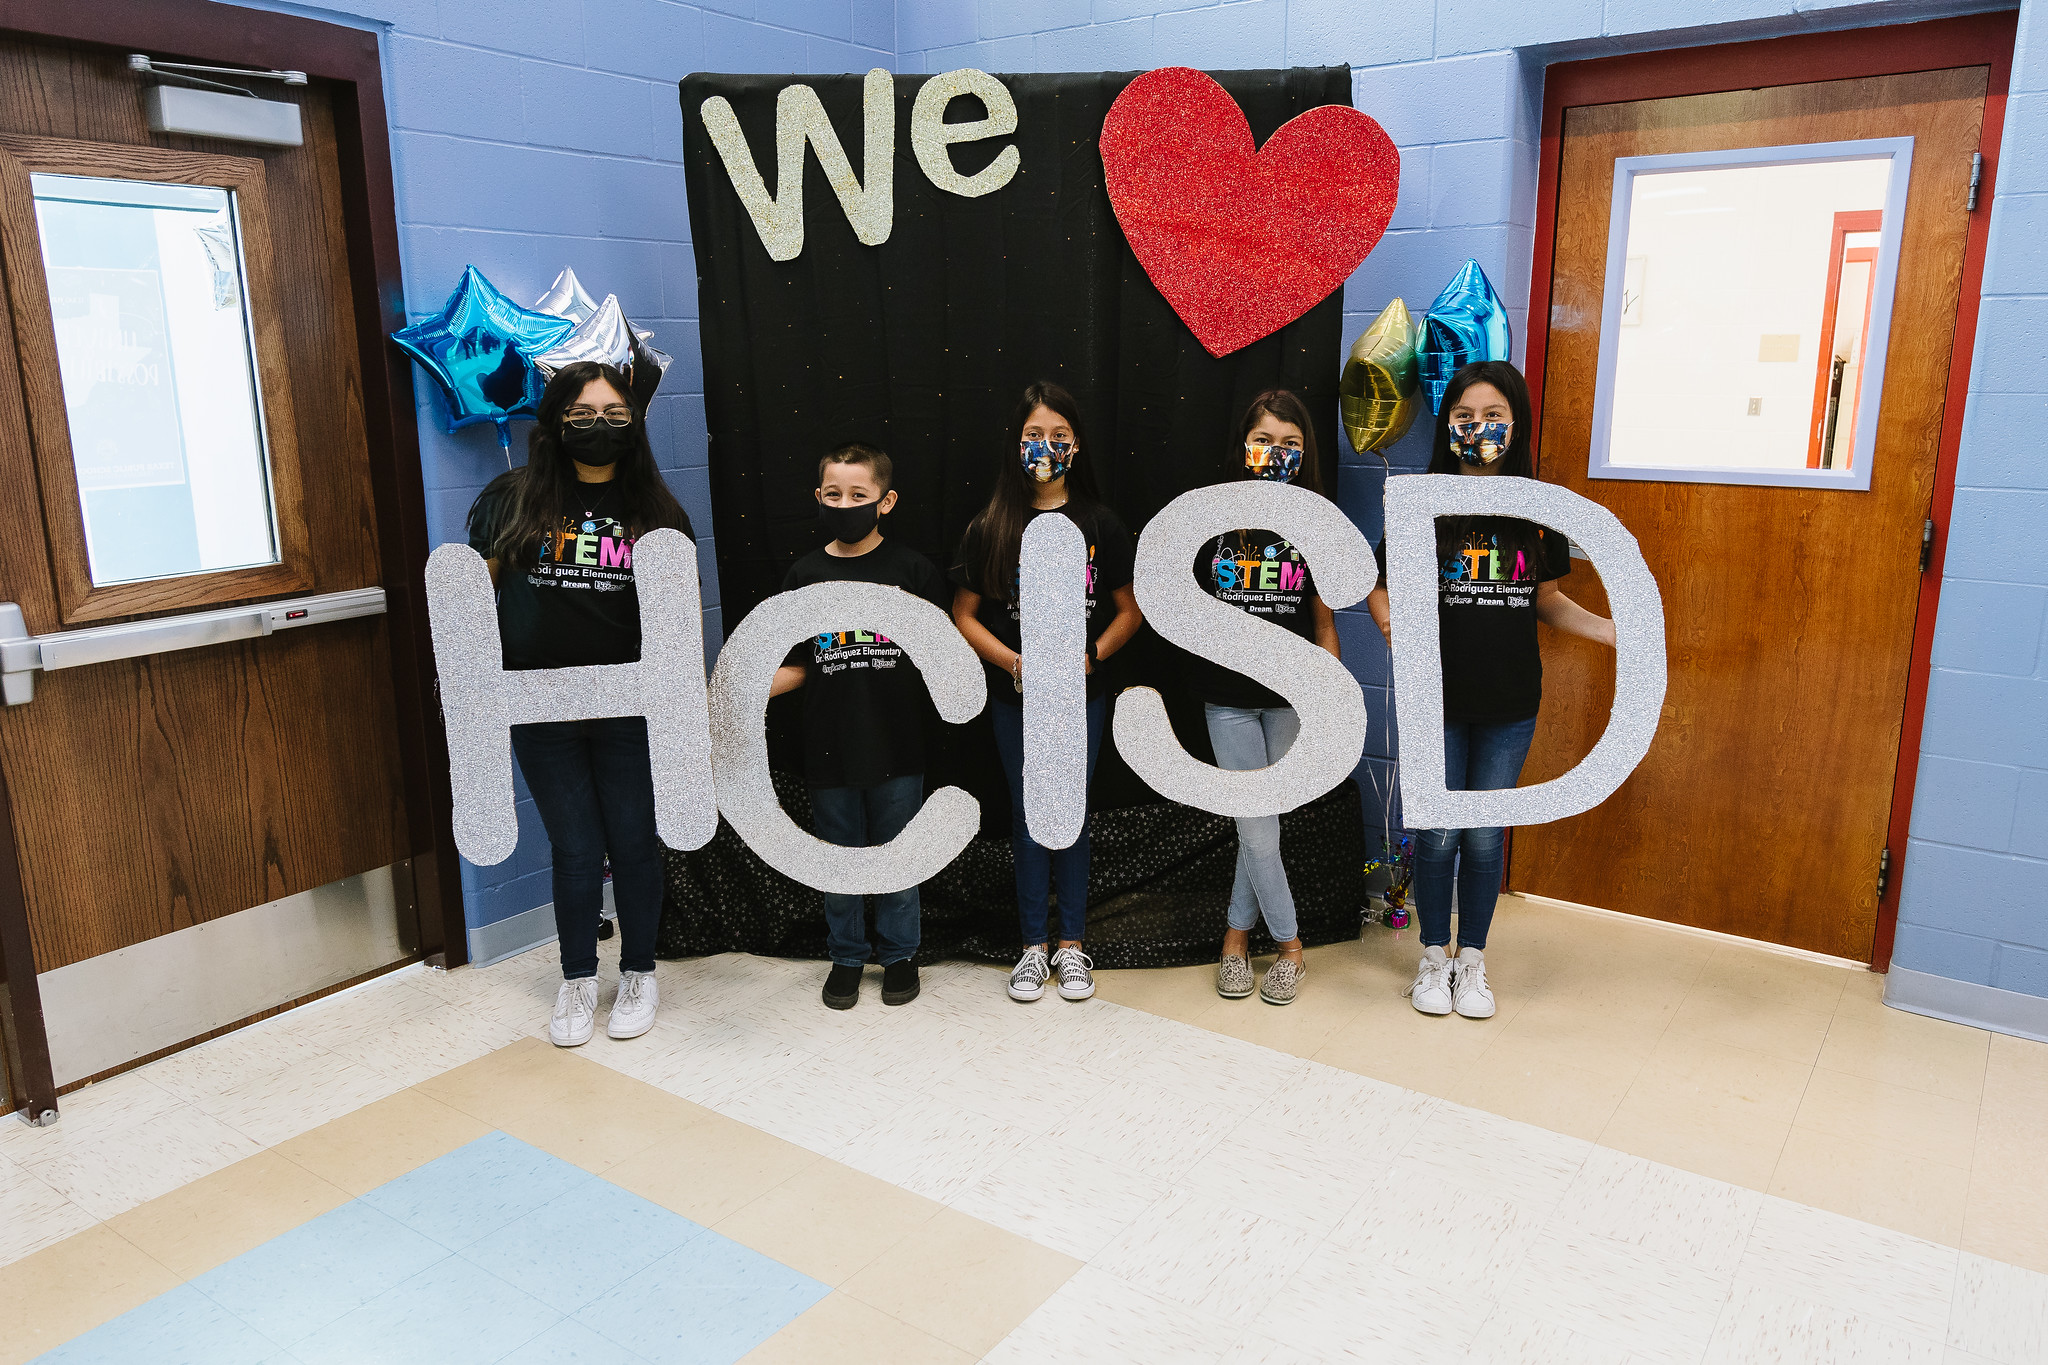 HCISD kicks off Texas Public Schools Week at Rodriguez Elementary